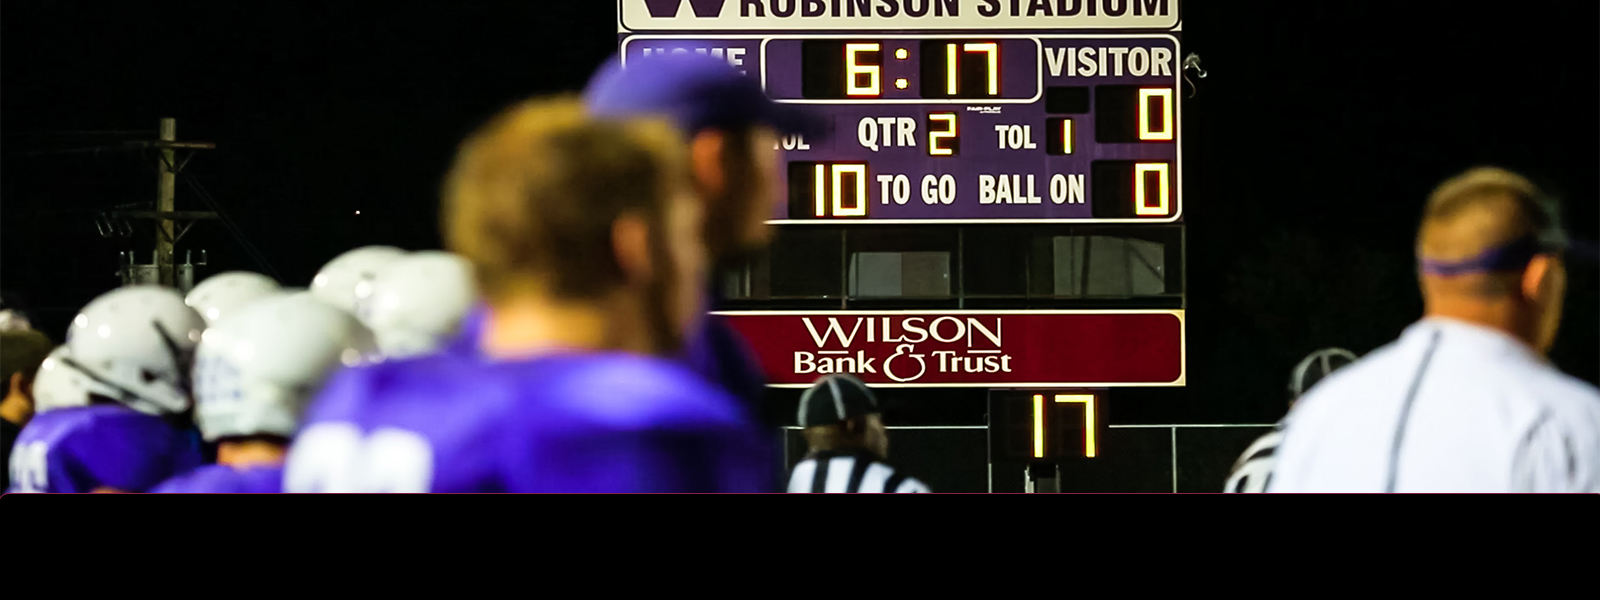 A high school football score board with Wilson bank logo.